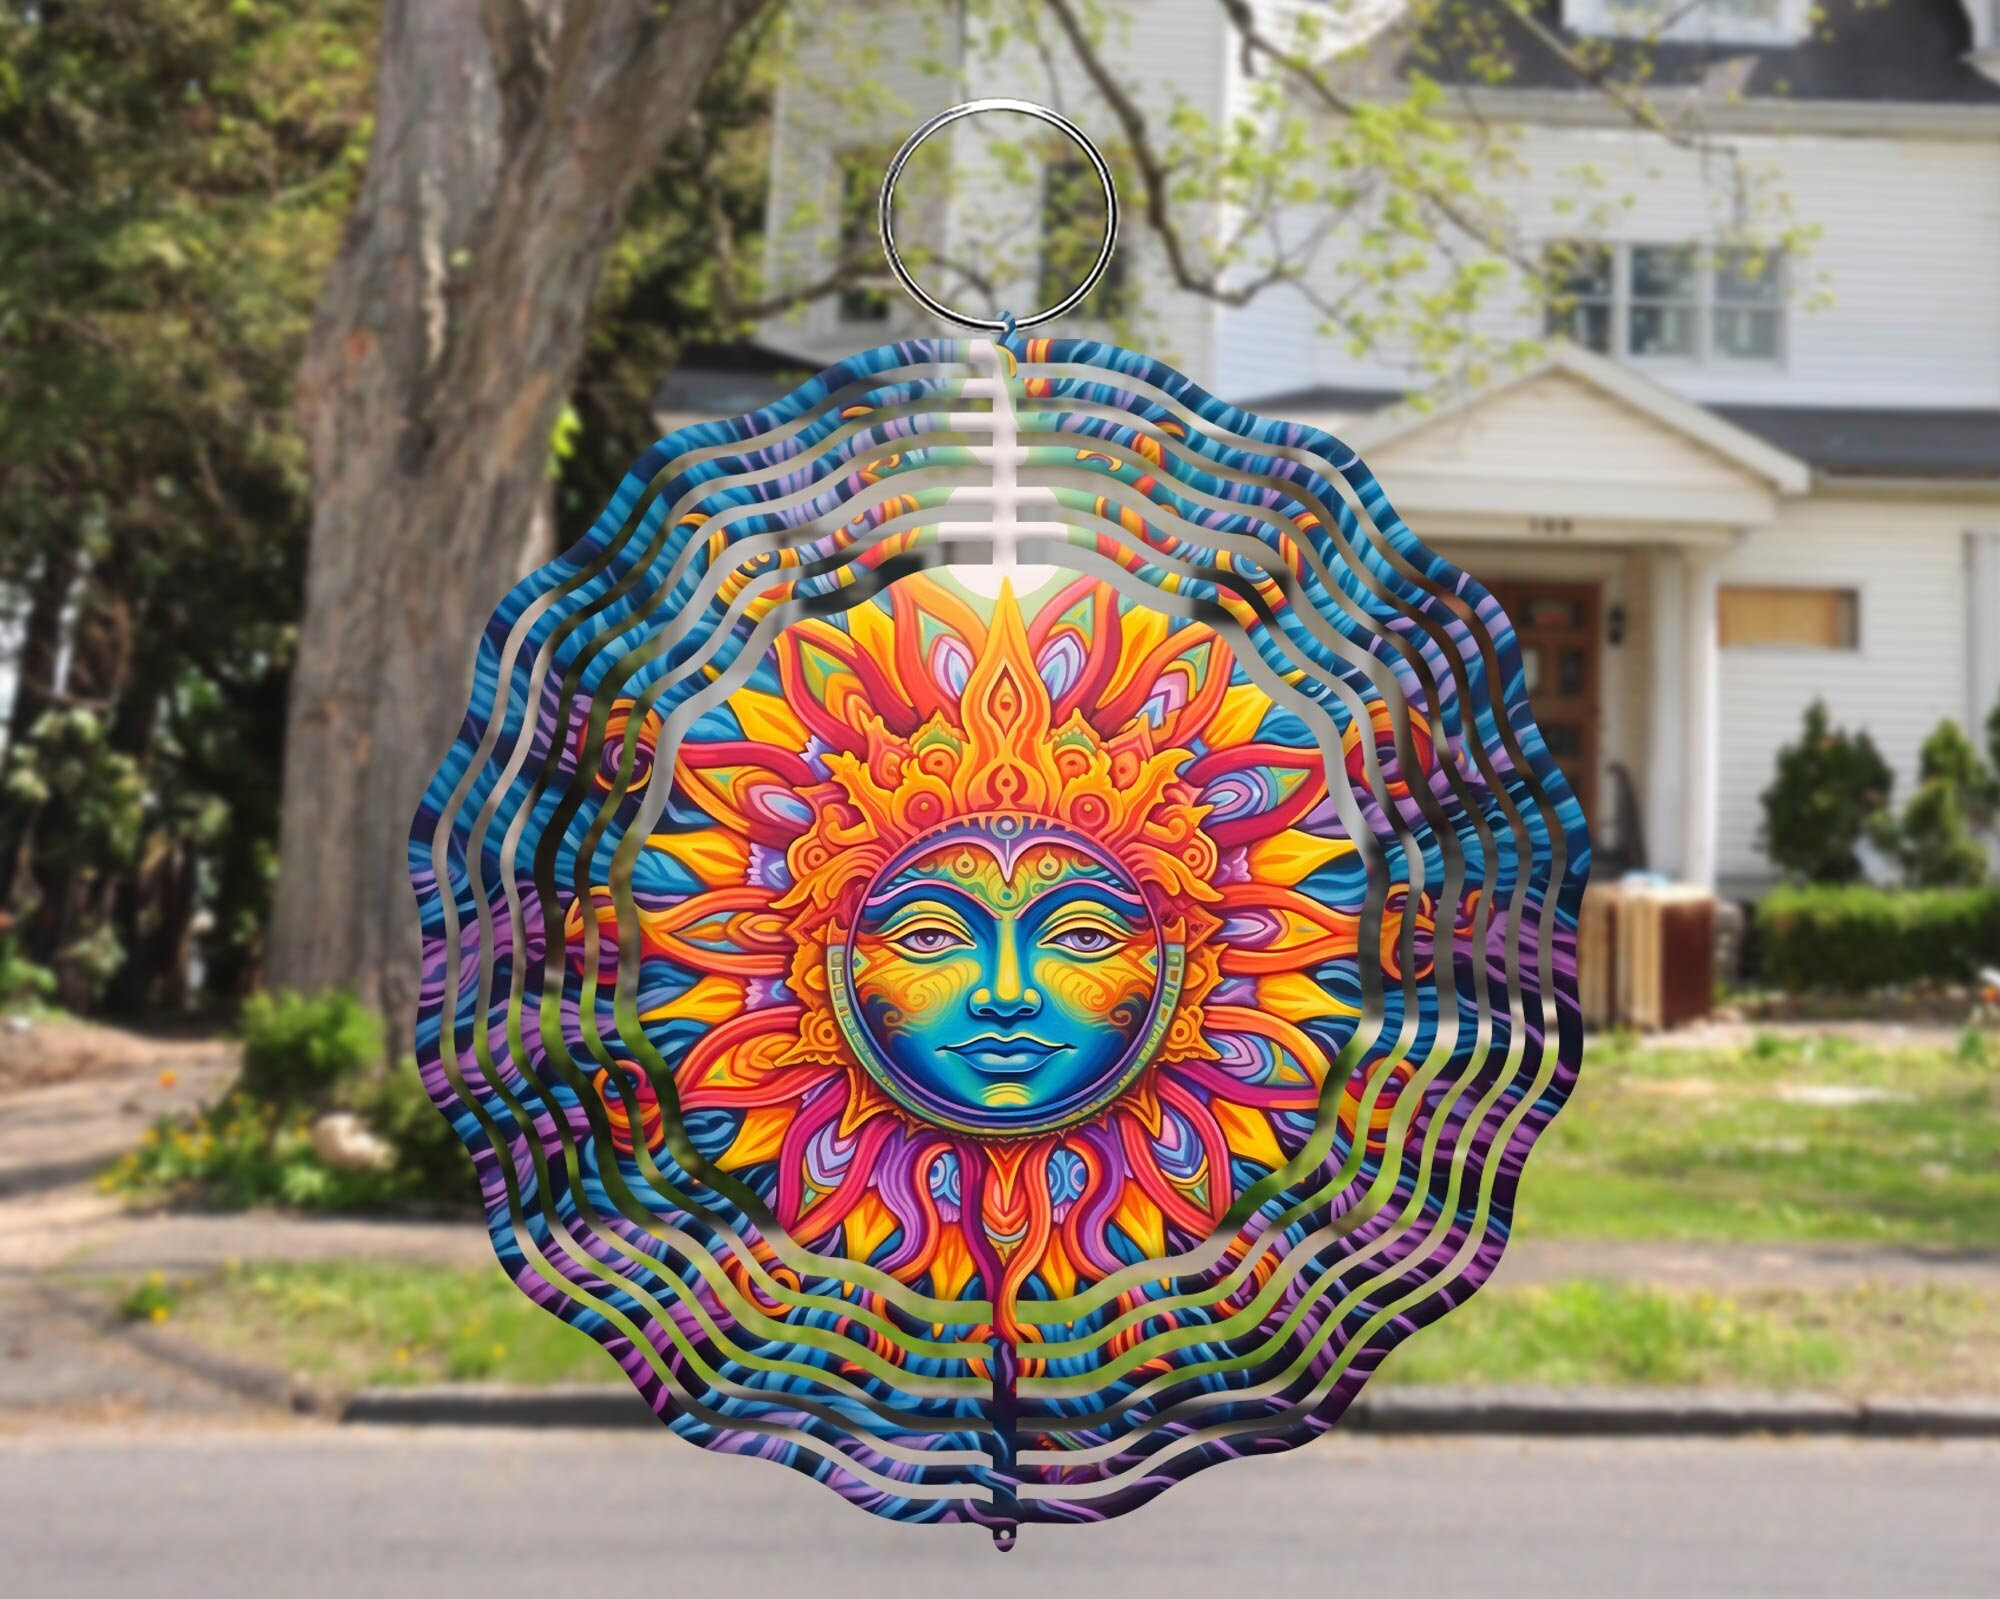 3D Celestial Sun Wind Spinner For Yard And Garden, Outdoor Garden Yard Decoration, Garden Decor, Chime Art Gift